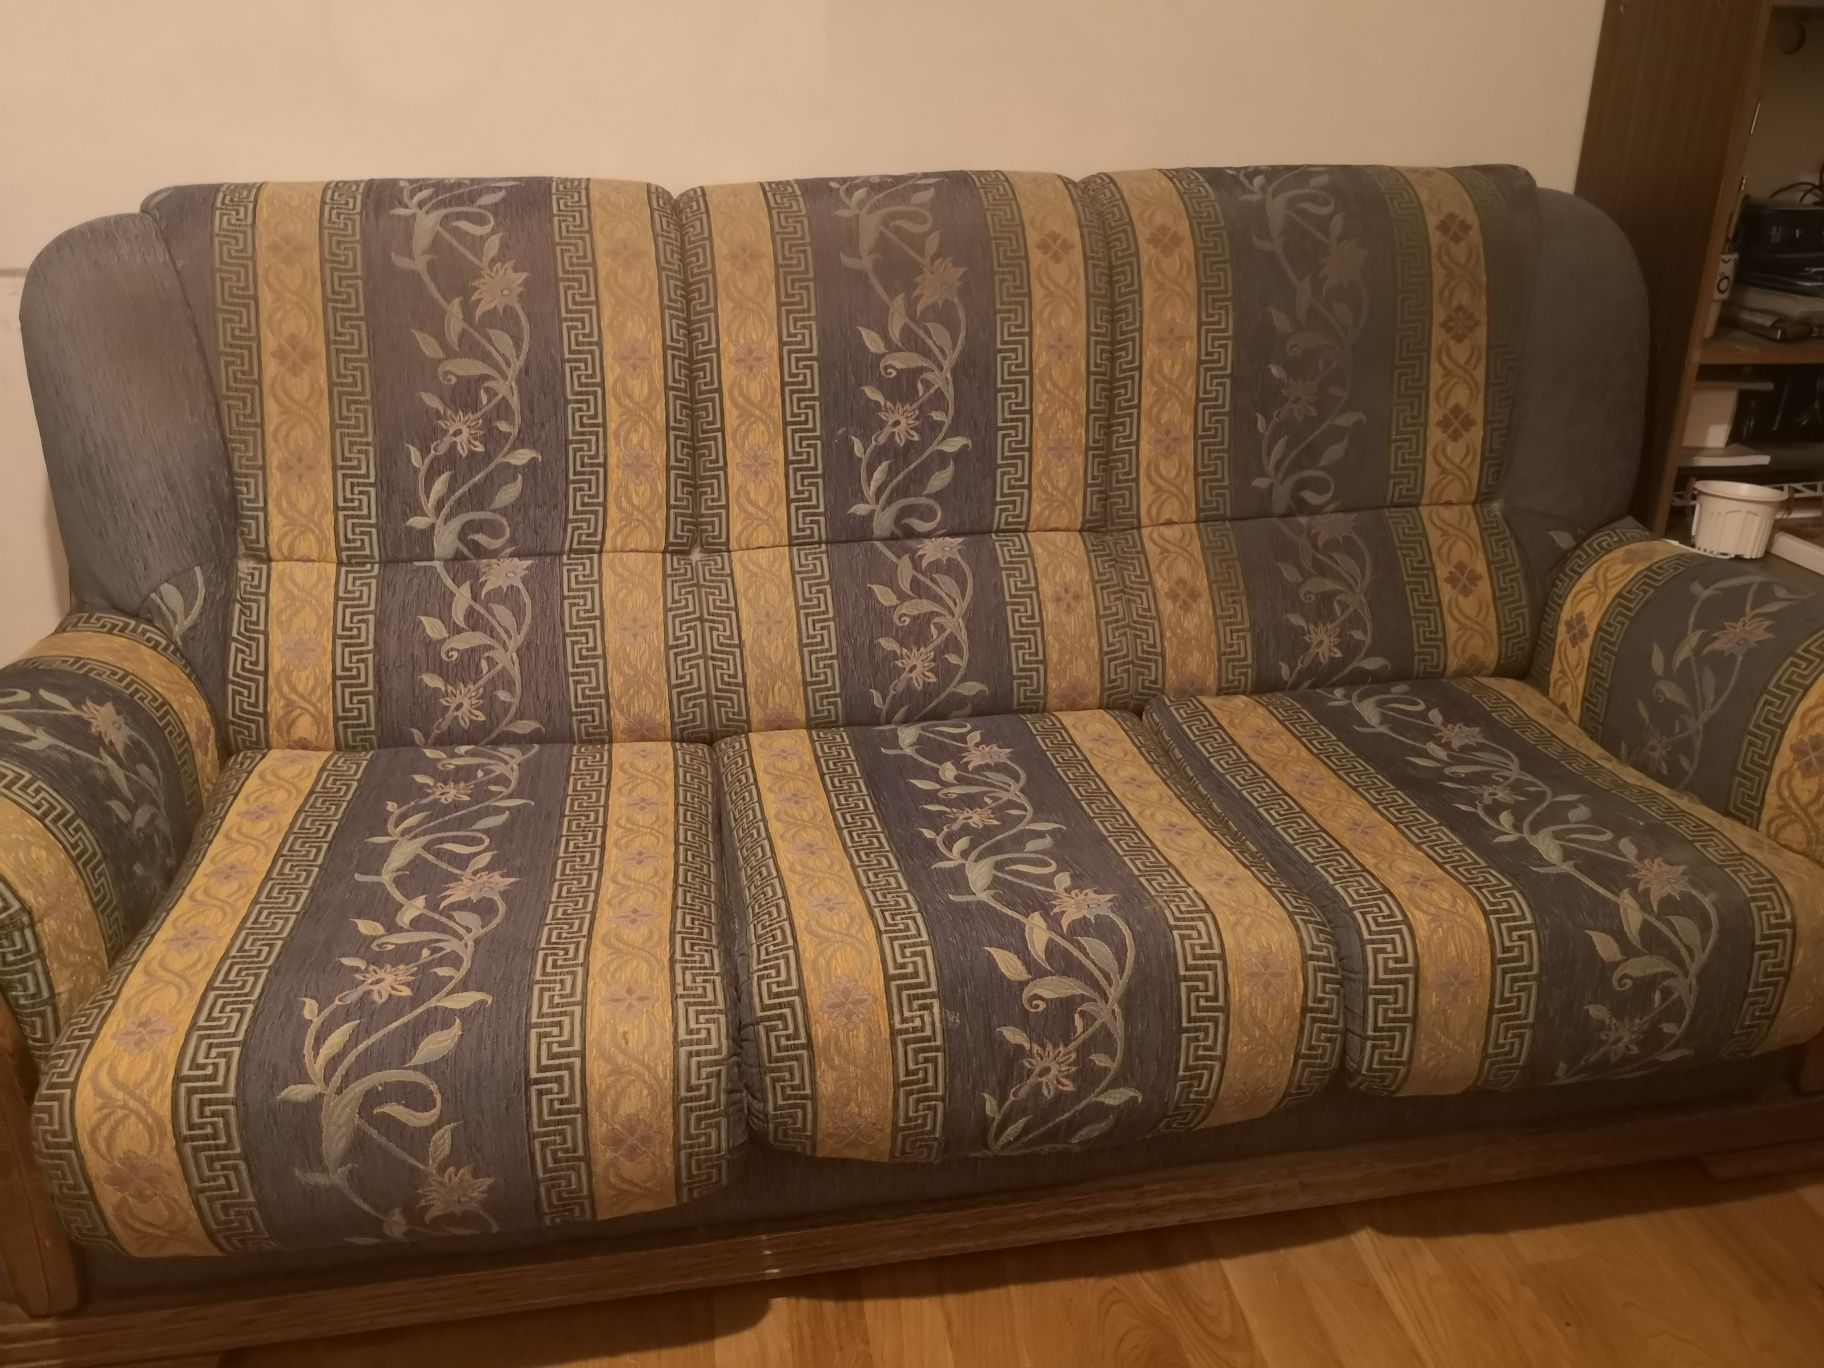 Sofa i dwa fotele